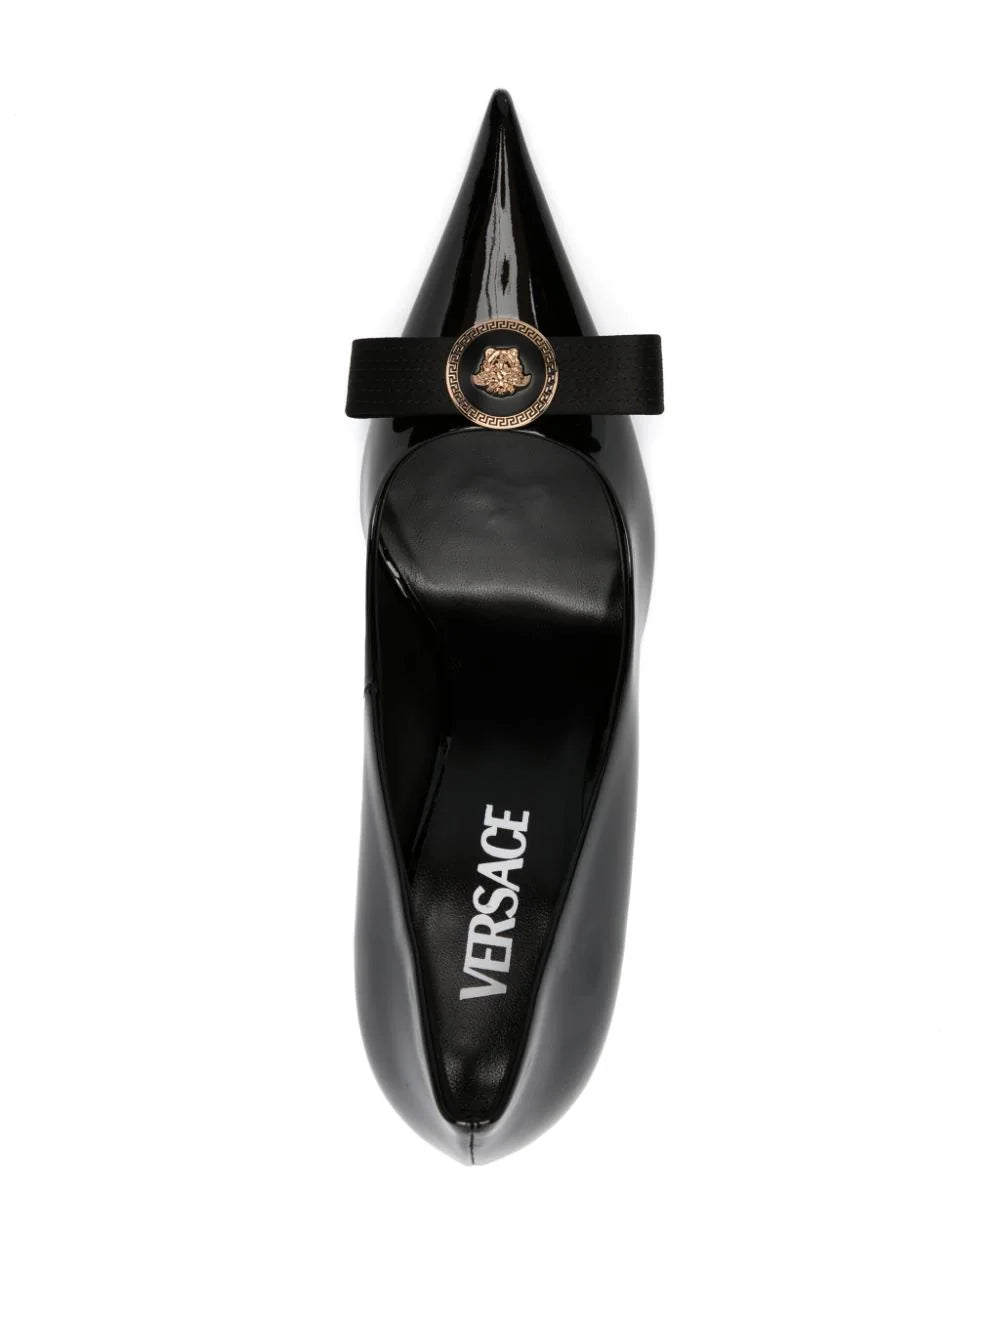 Versace Black Ribbon Pumps